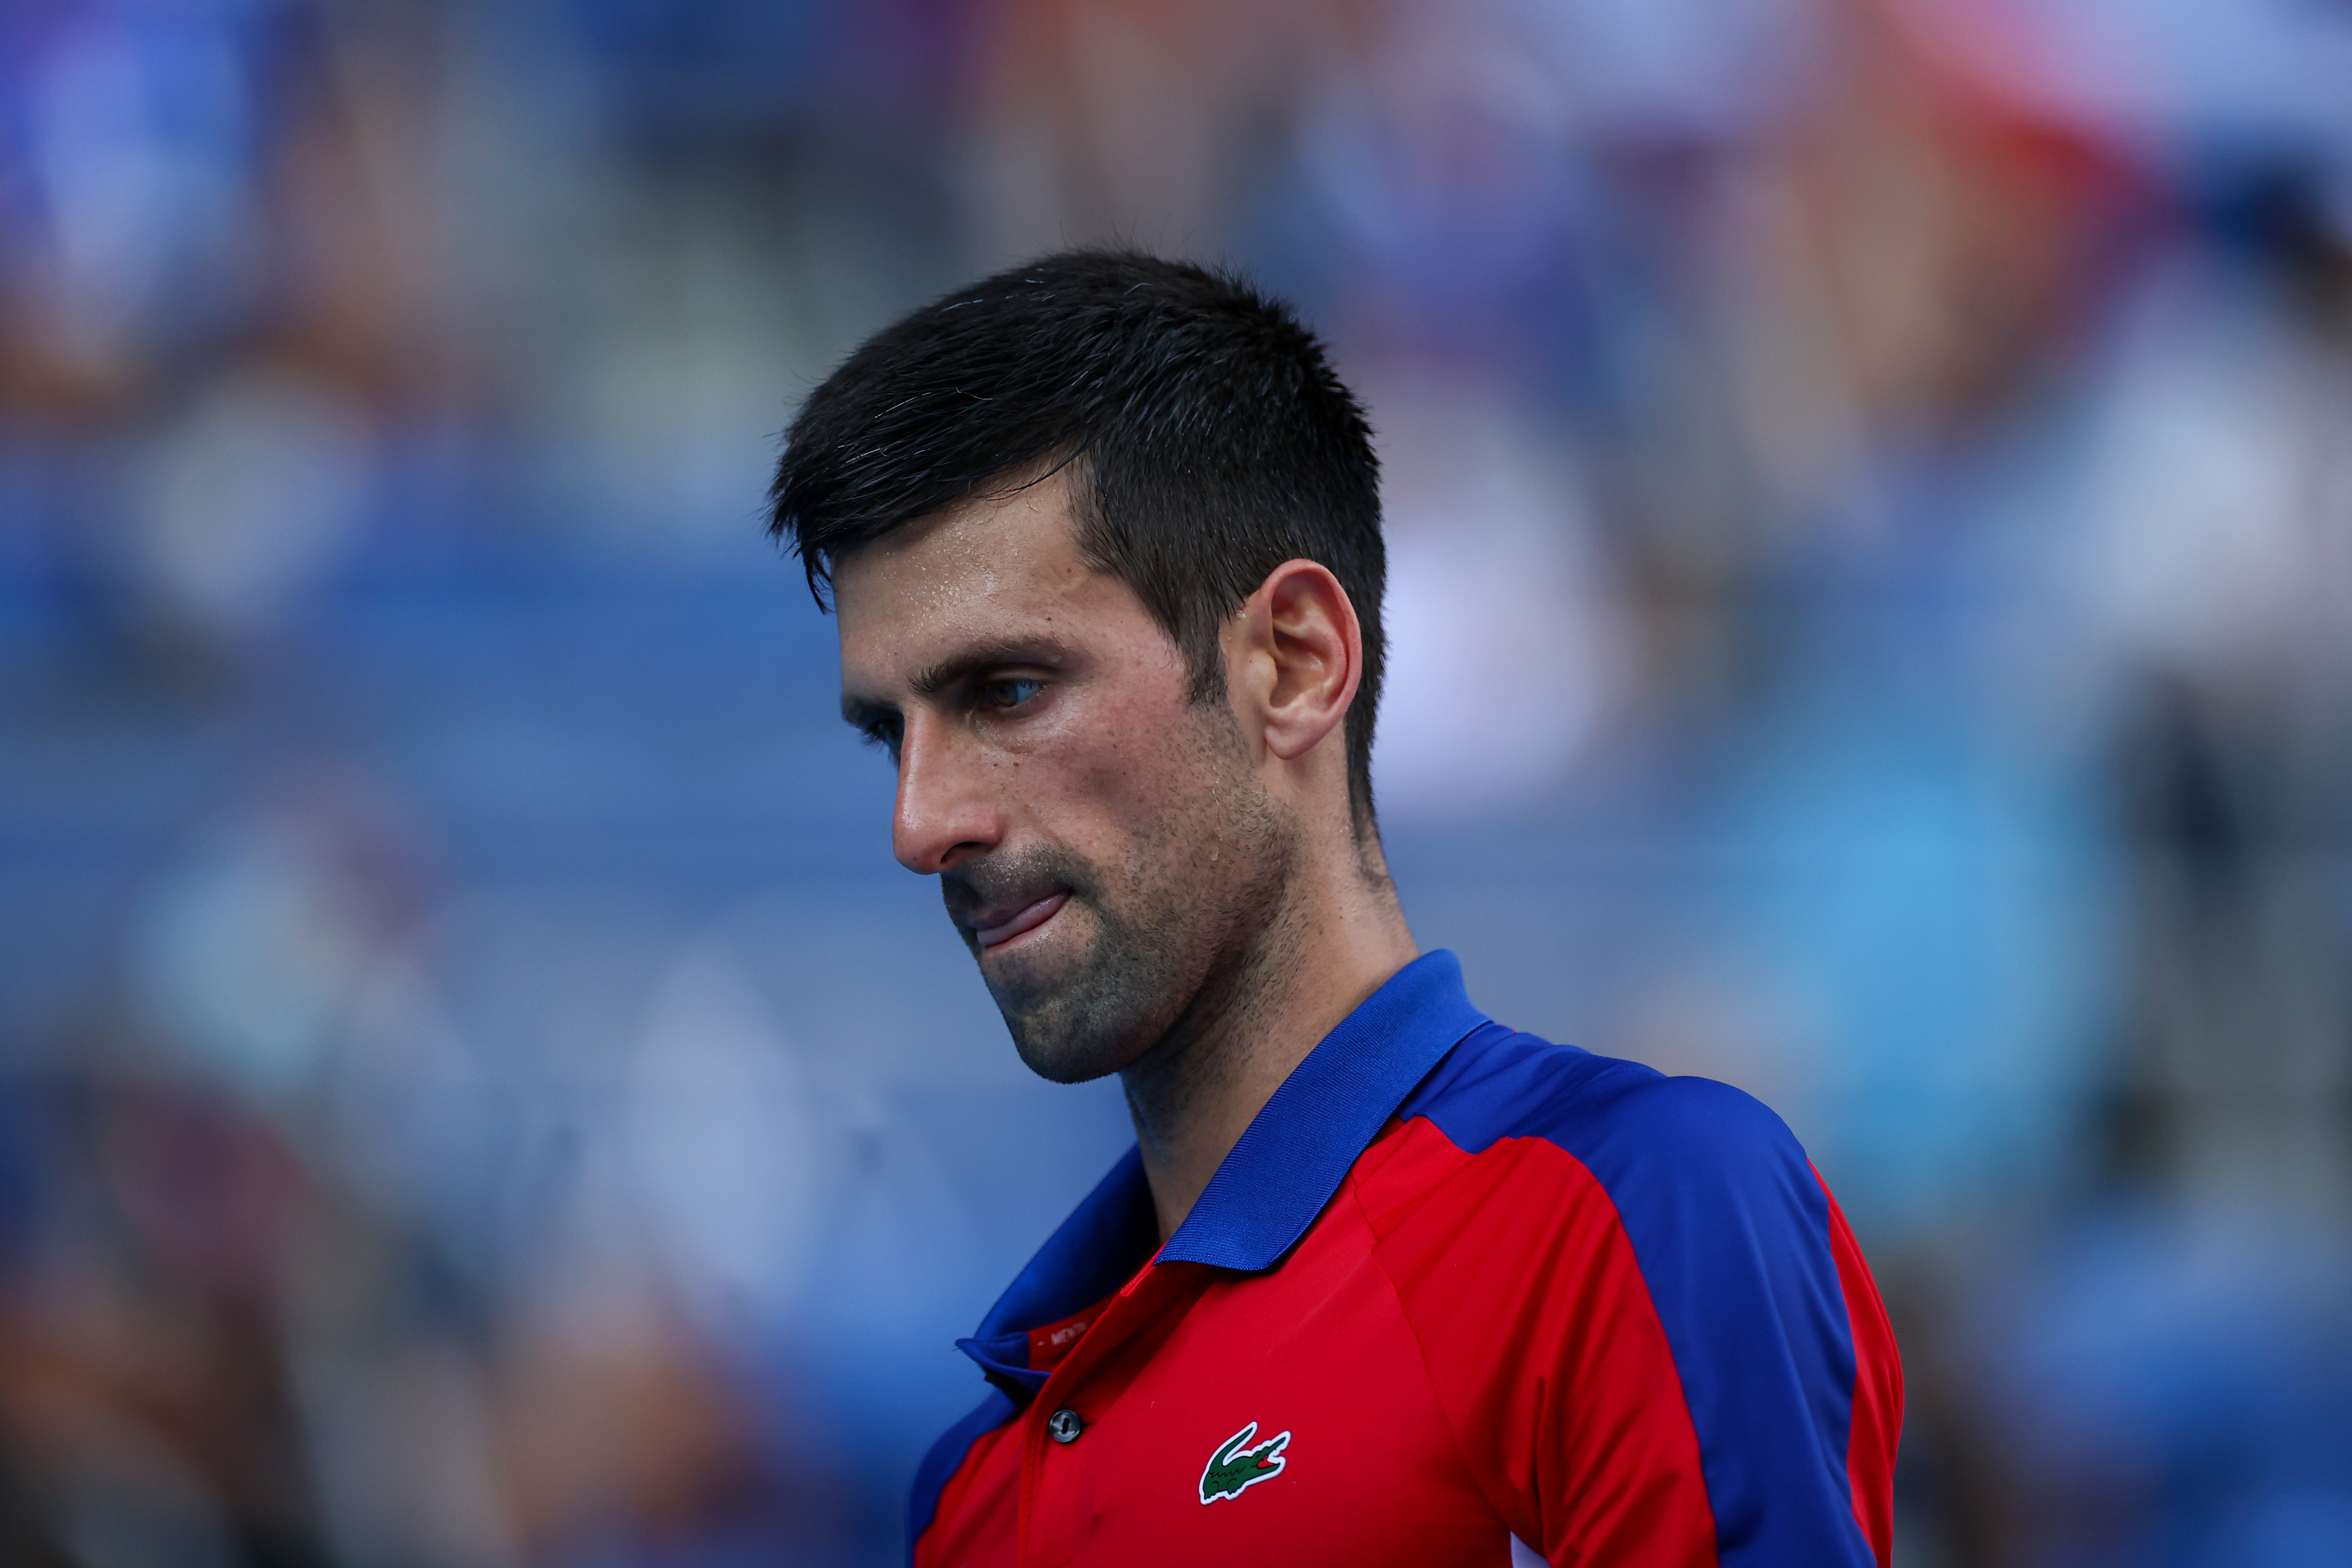 Djokovic Faces Deportation After Australia Revokes His Visa Again